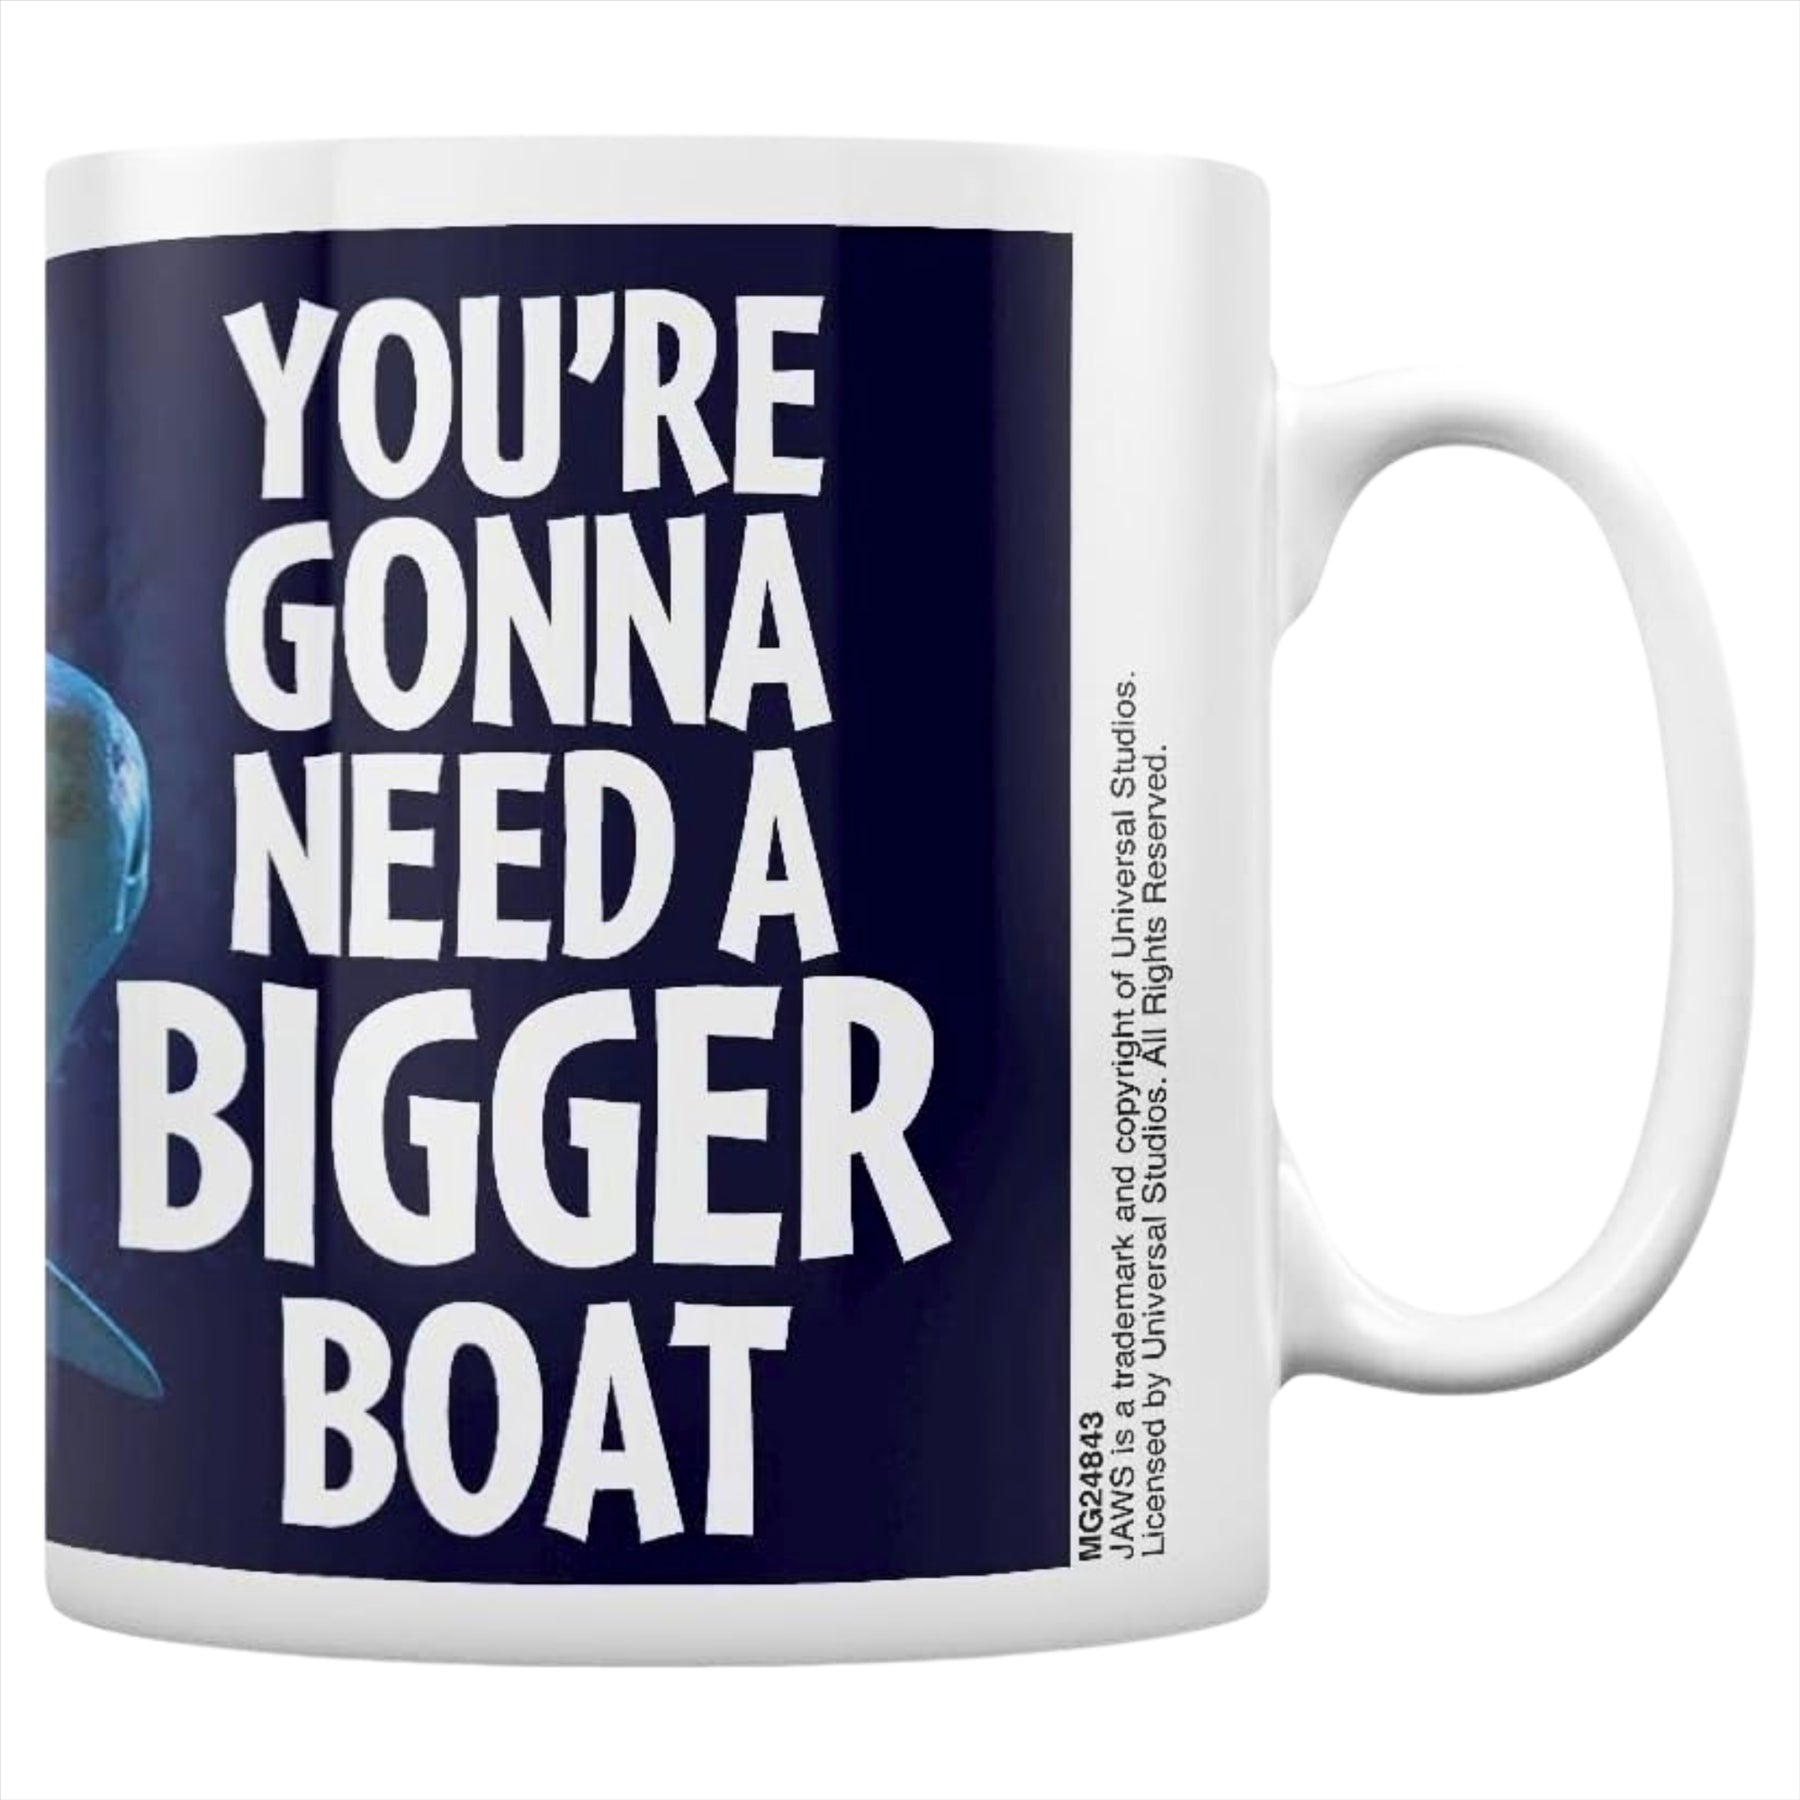 Jaws Movie Ceramic Coffee Mug 330ml  - You're Gonna Need a Bigger Boat